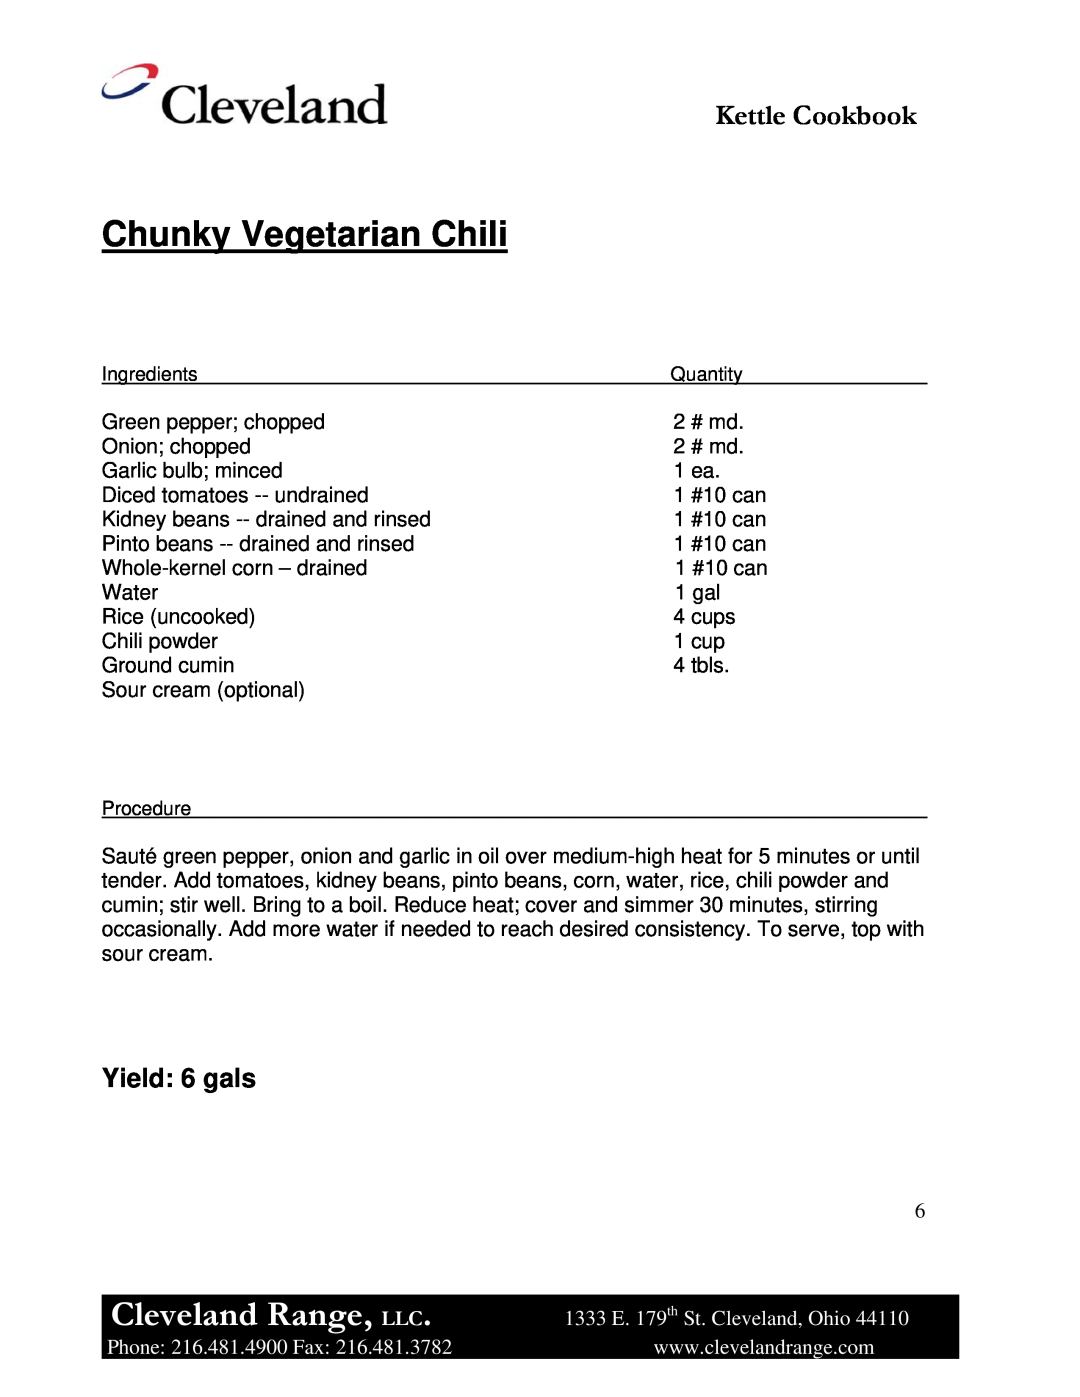 Cleveland Range Steam Jacketed Kettle manual Chunky Vegetarian Chili, Yield 6 gals, Cleveland Range, LLC, Kettle Cookbook 